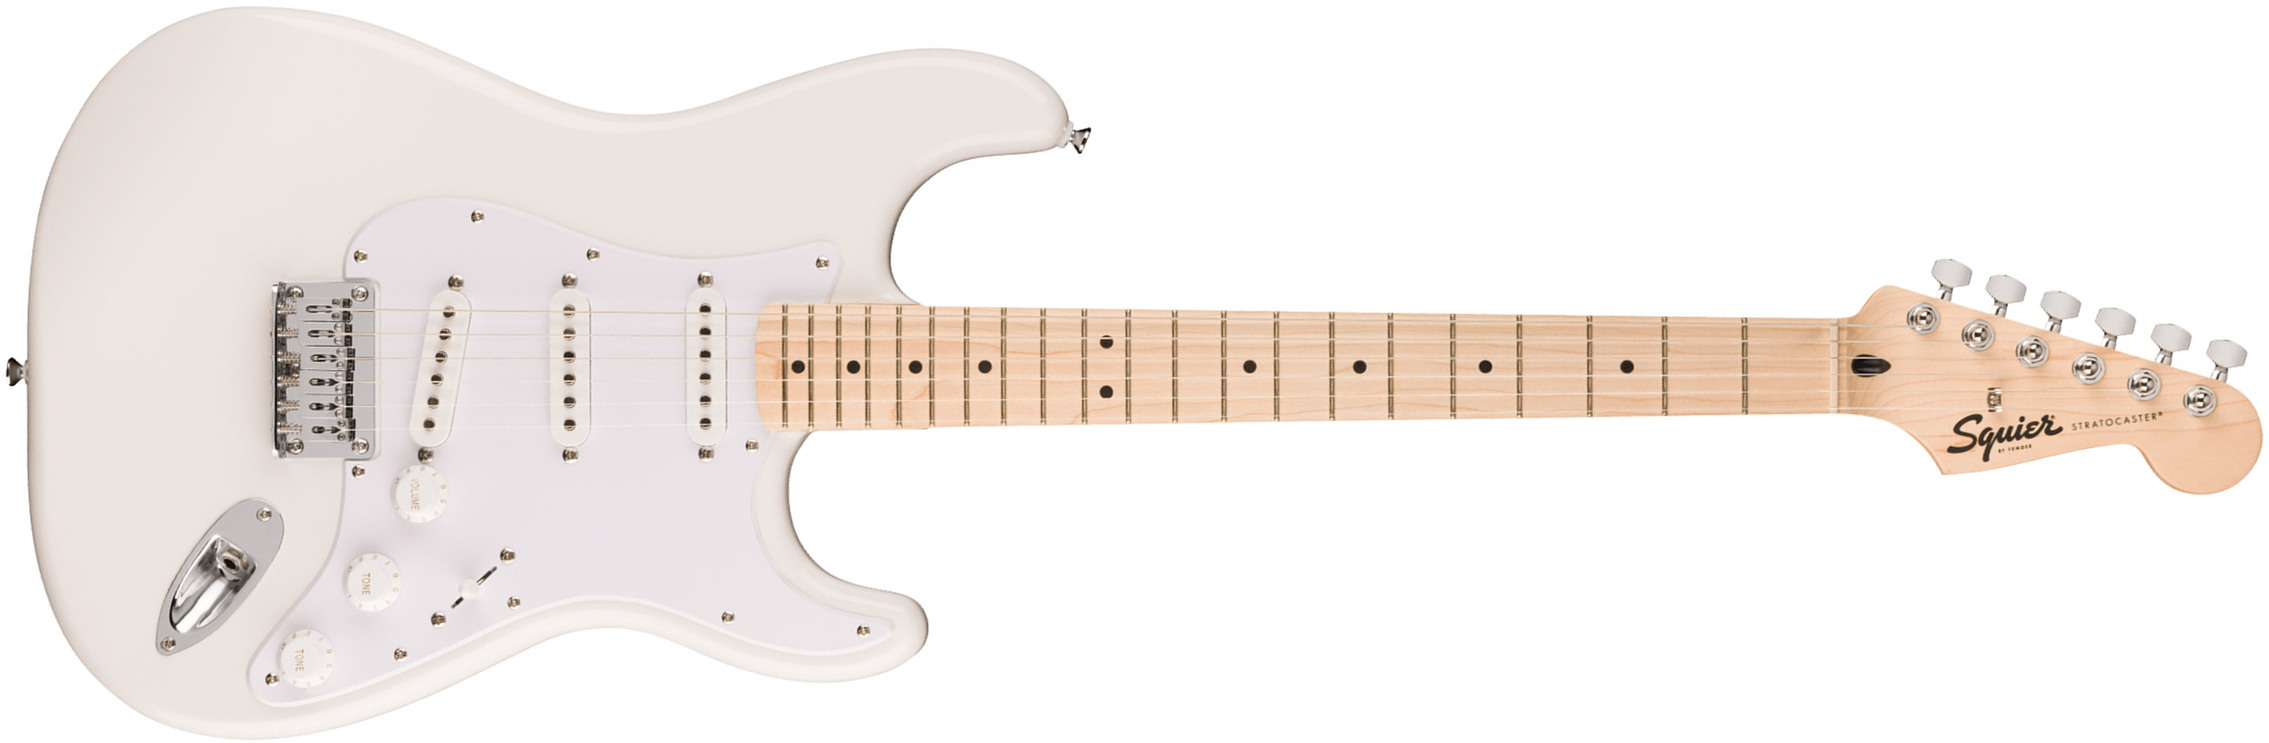 Squier Strat Sonic Hardtail 3s Ht Mn - Arctic White - Str shape electric guitar - Main picture